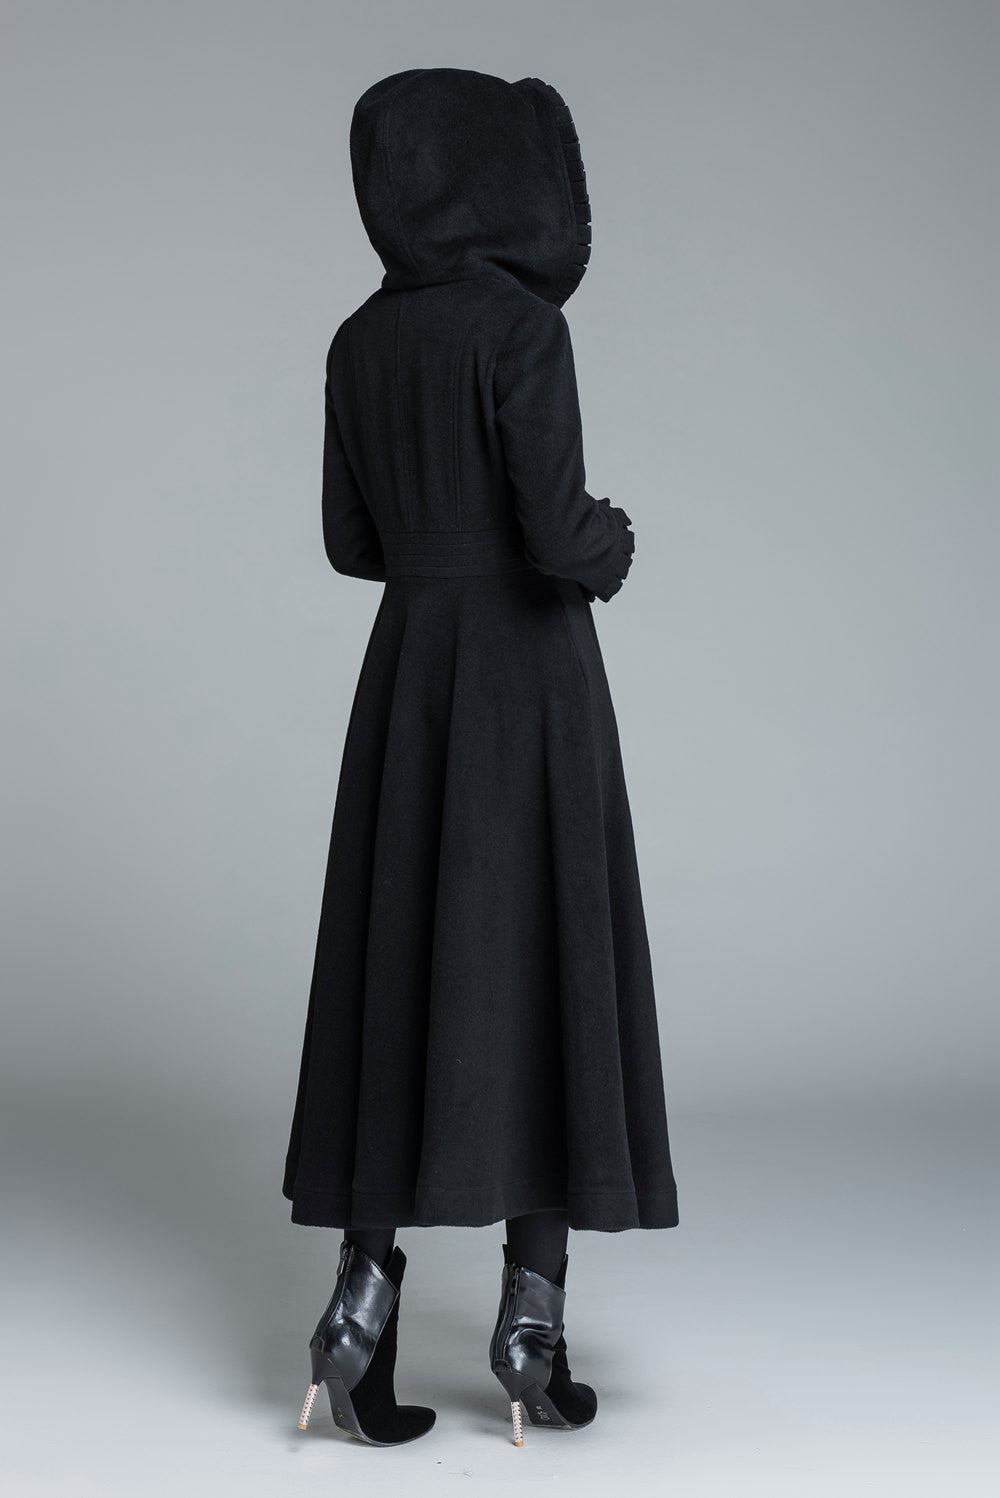 Black wool coat, winter coat, princess coat 1649#